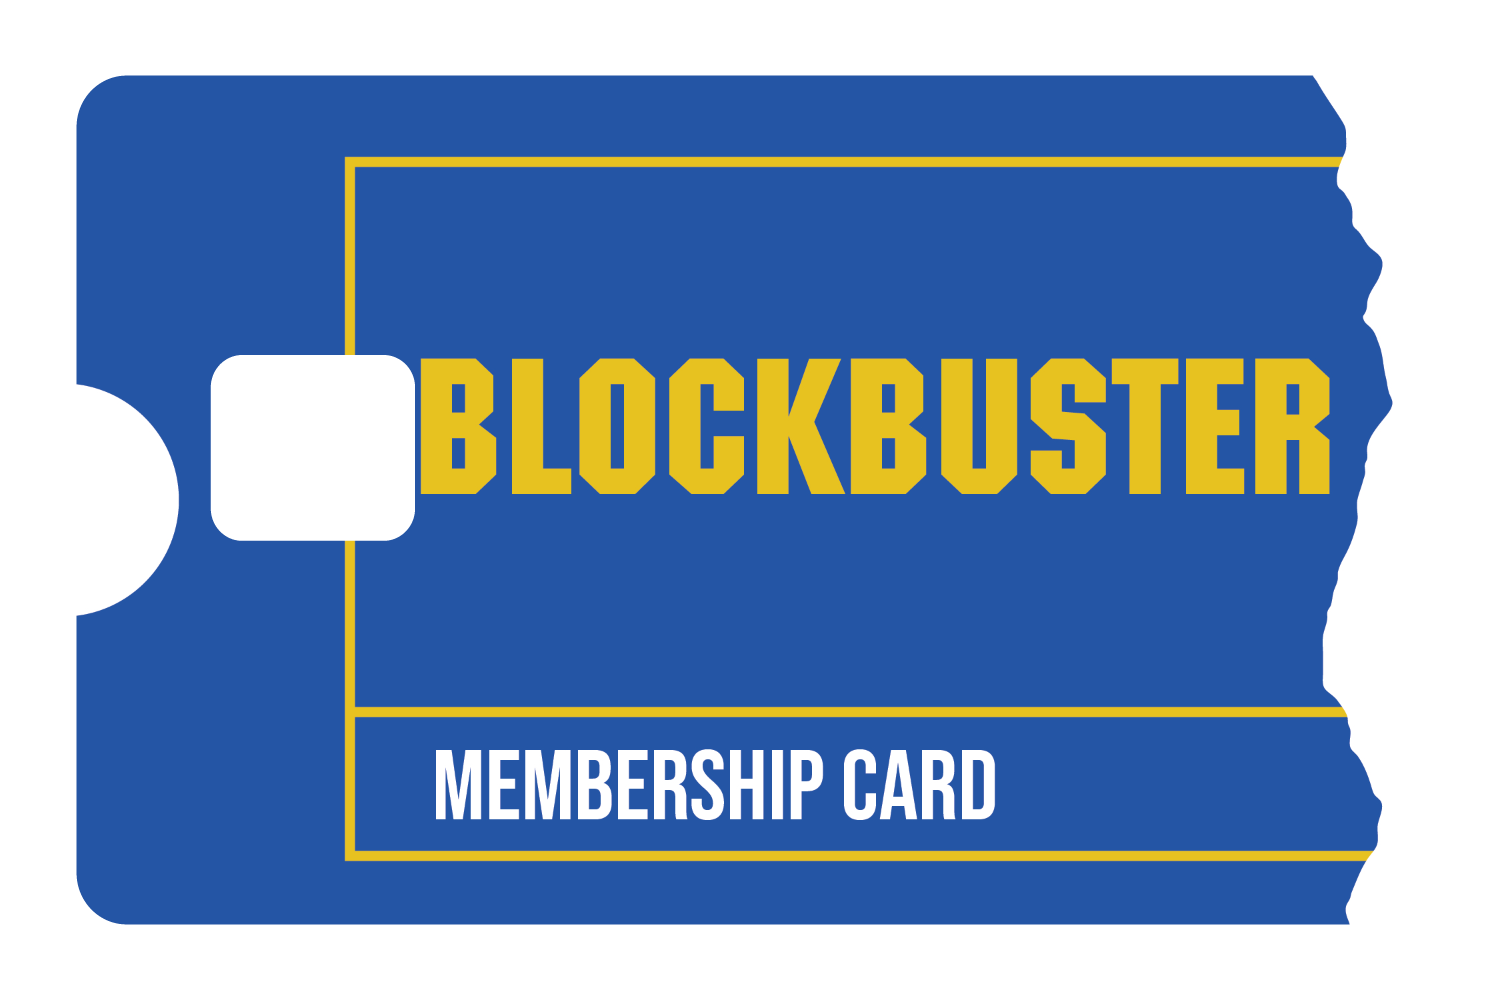 Blockbuster Membership Credit Card SMART Sticker Skin Wrap, Card Sticker  Decal